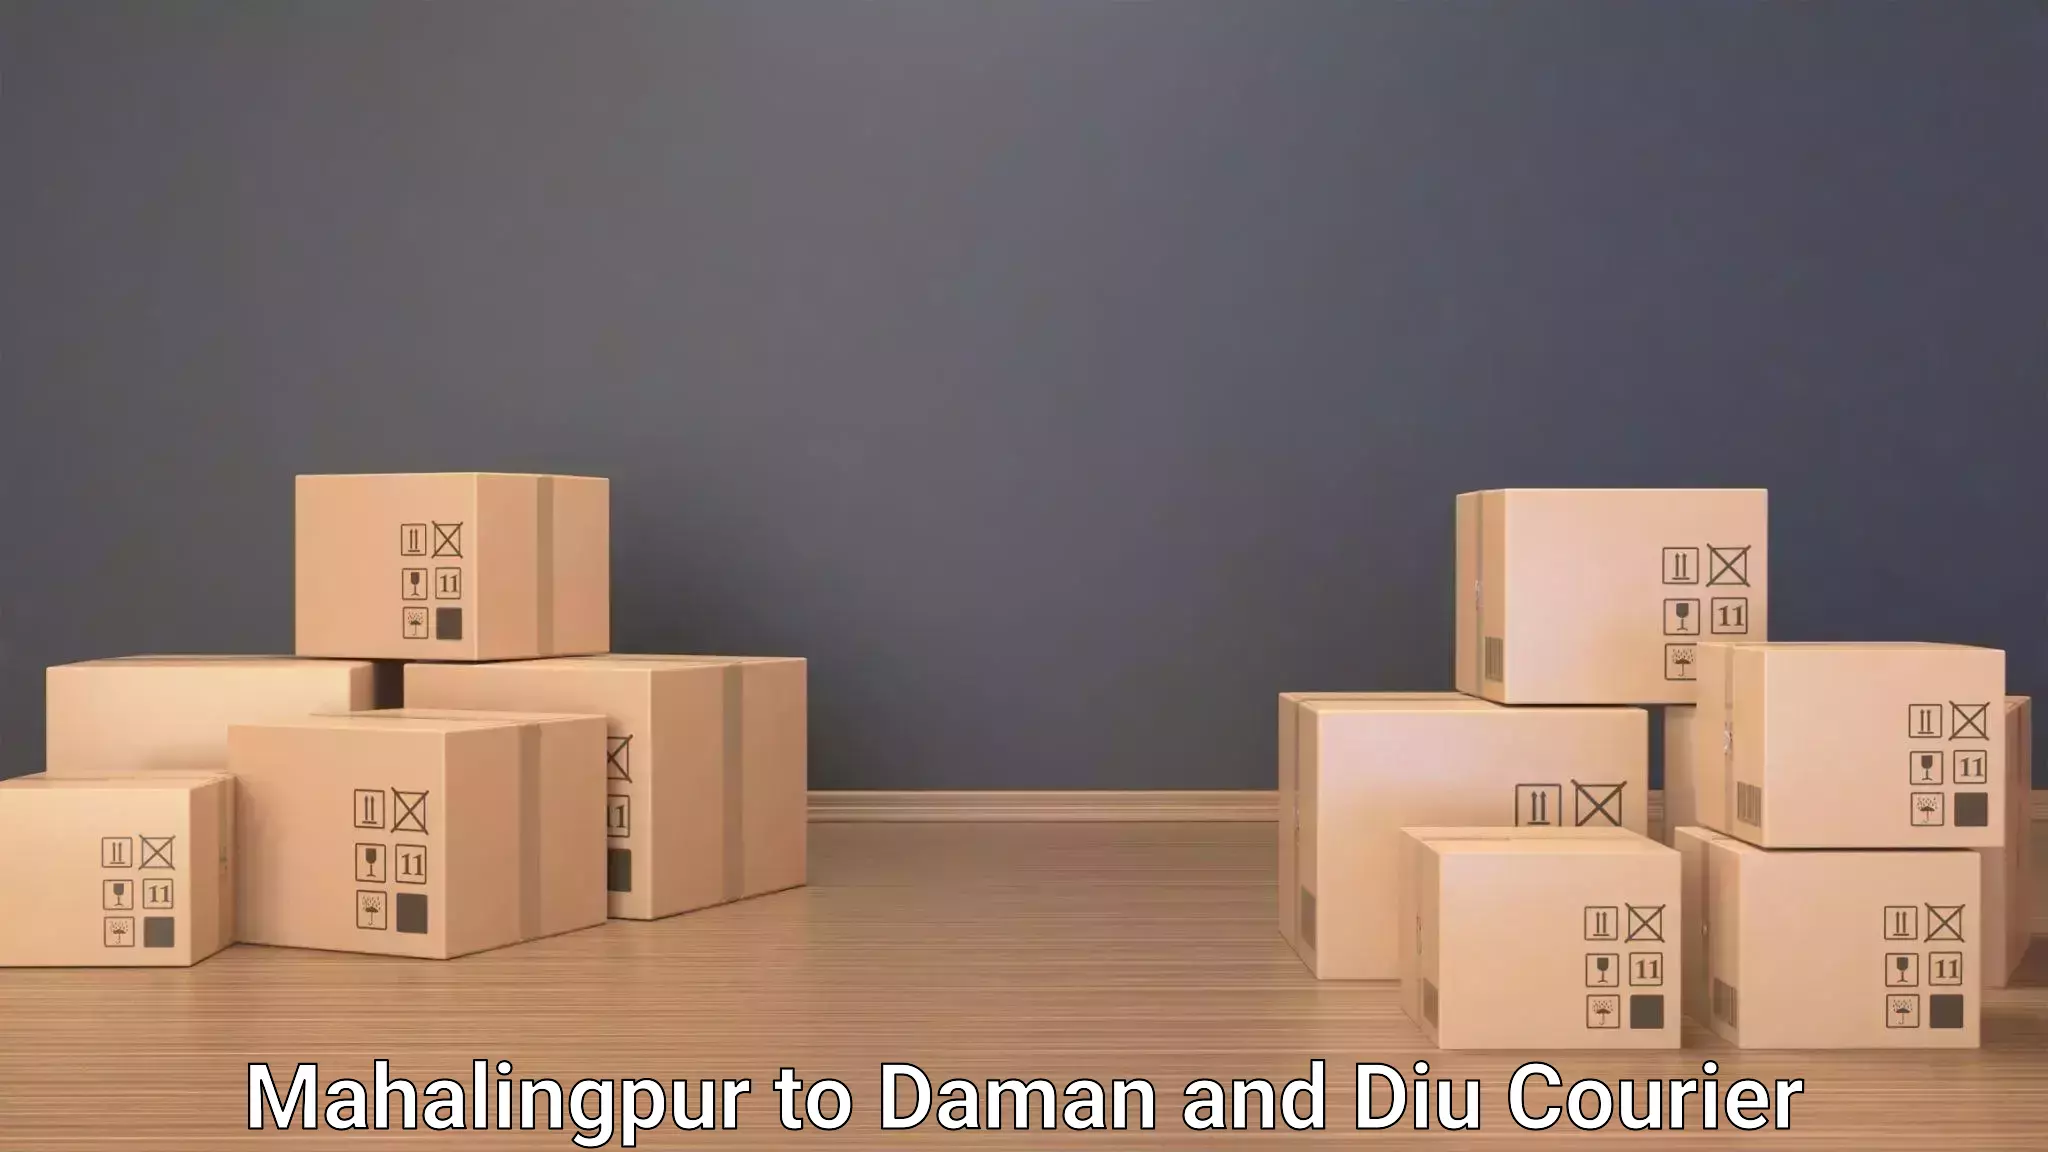 Same day luggage service Mahalingpur to Daman and Diu